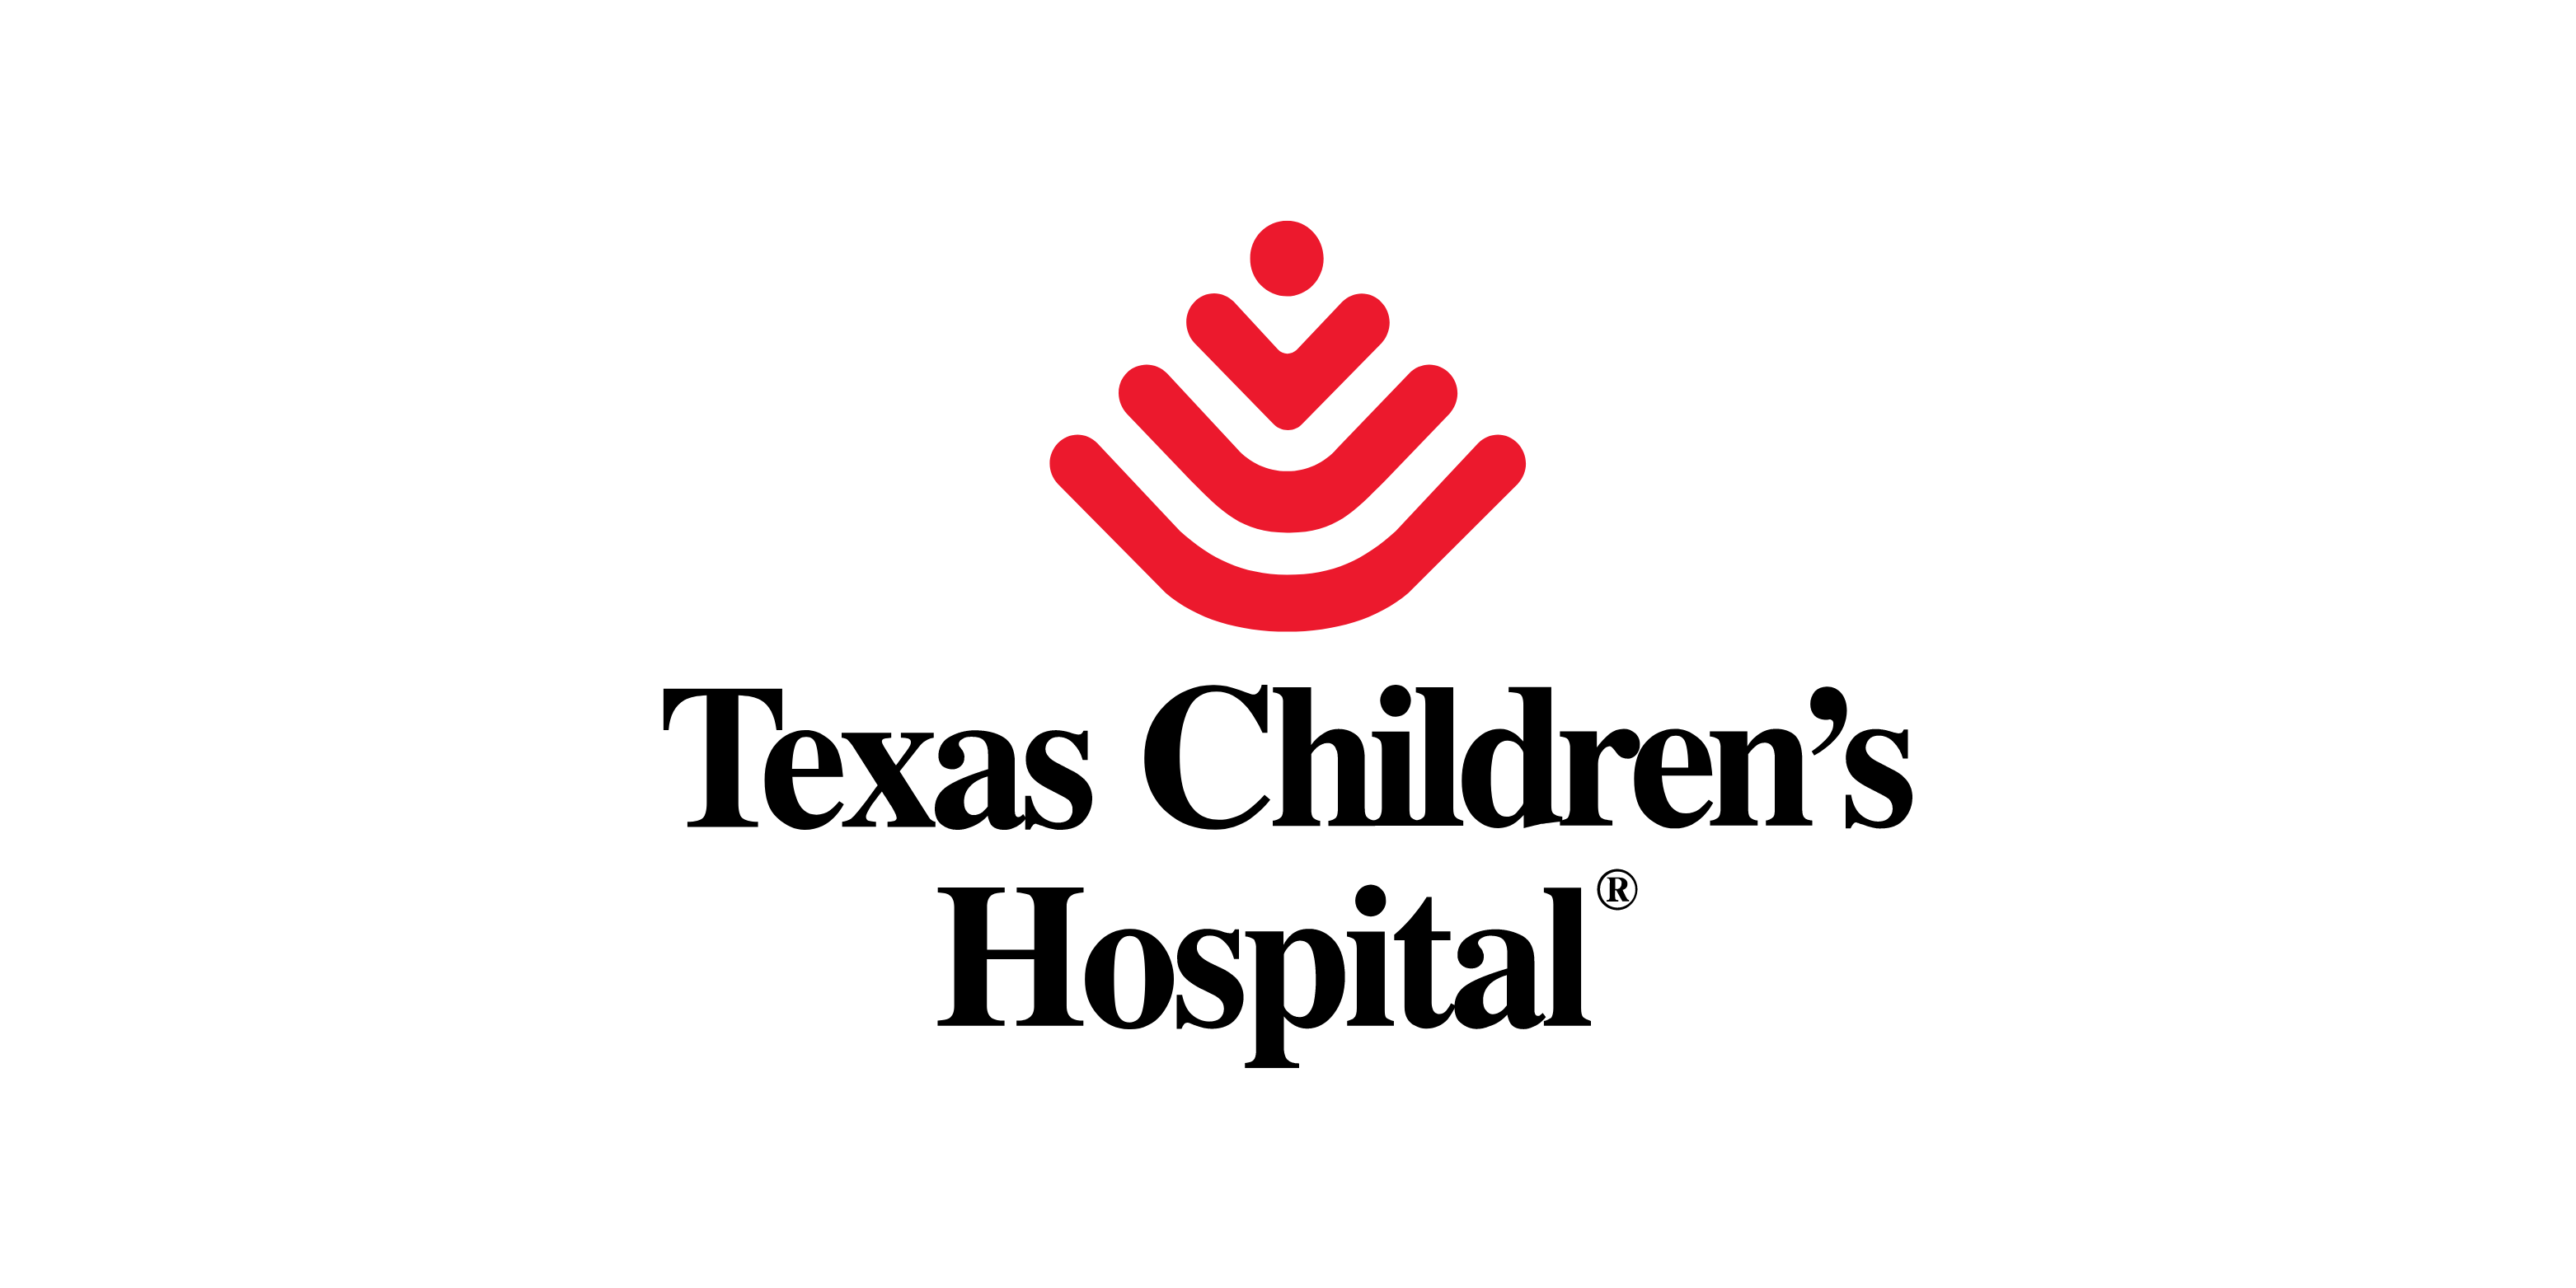 Texas Children's logo